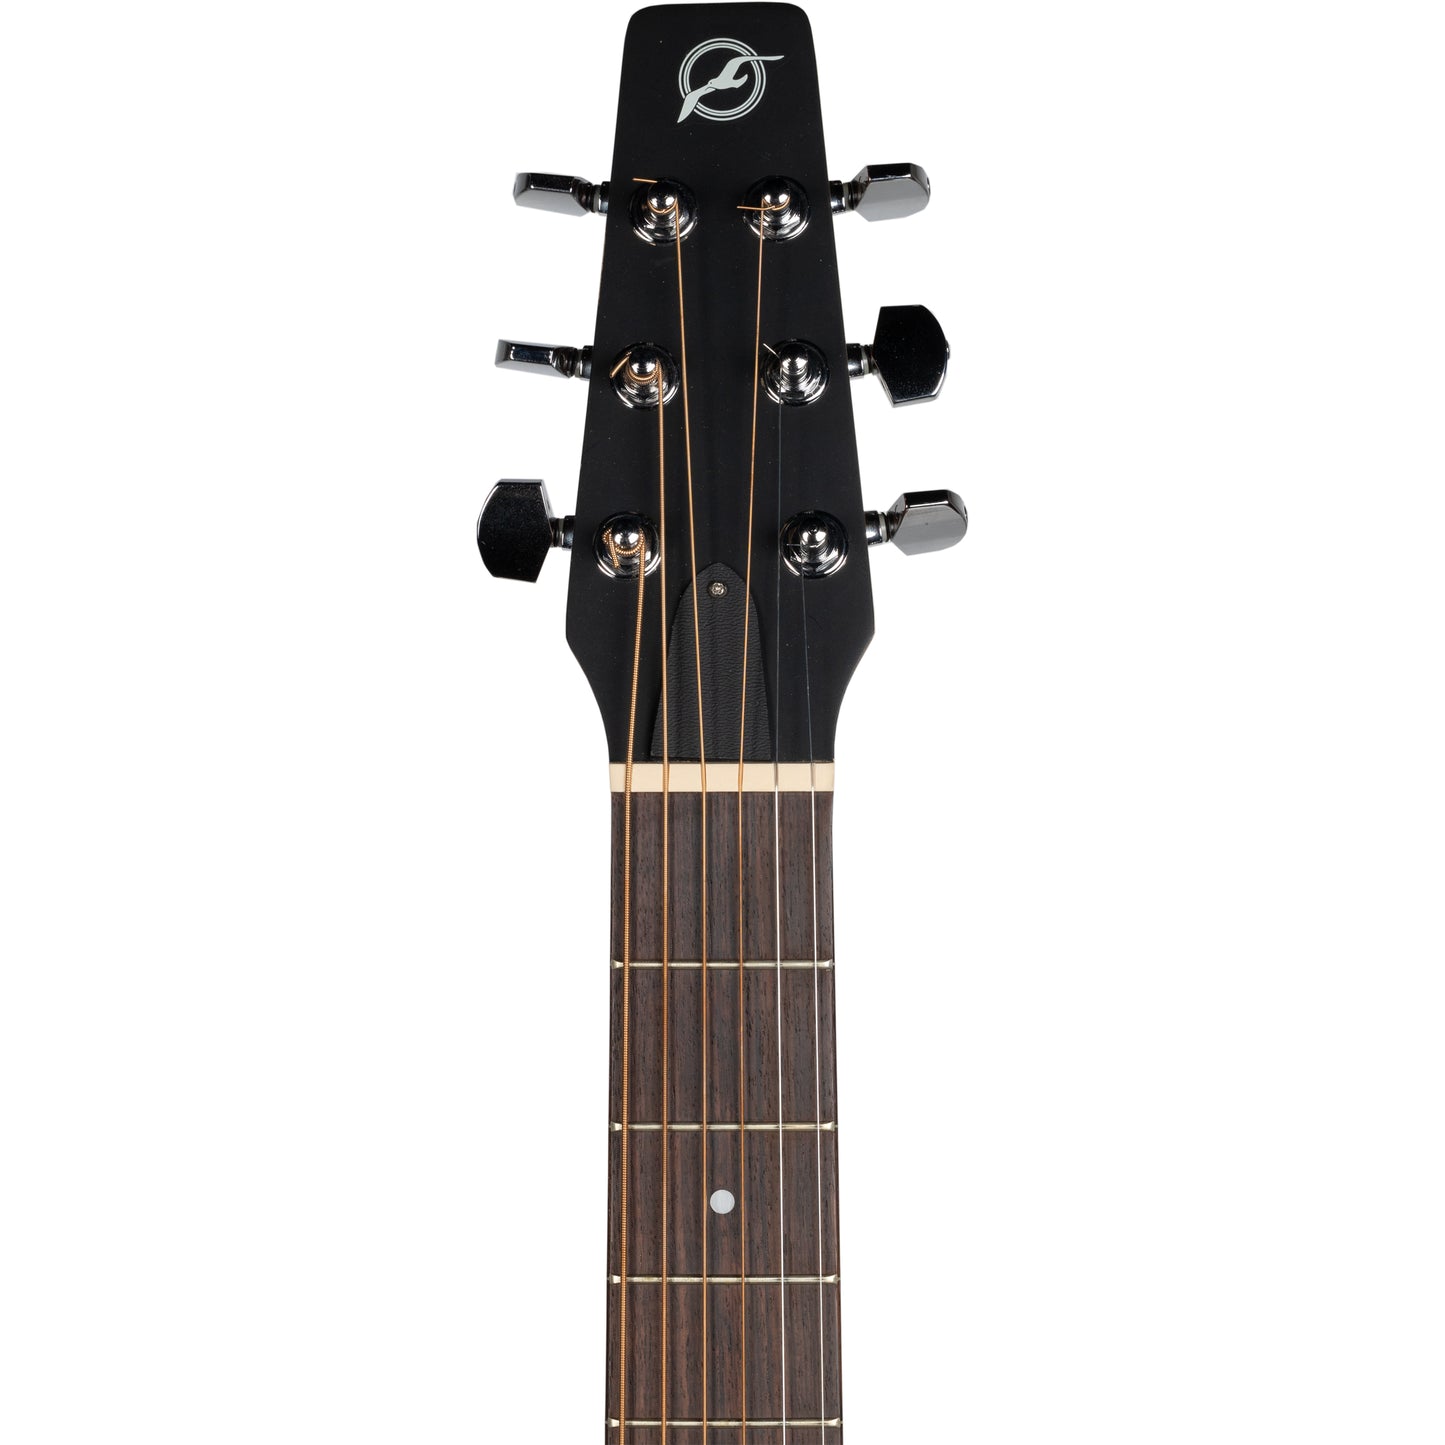 Seagull S6 Standard Acoustic Guitar - Natural